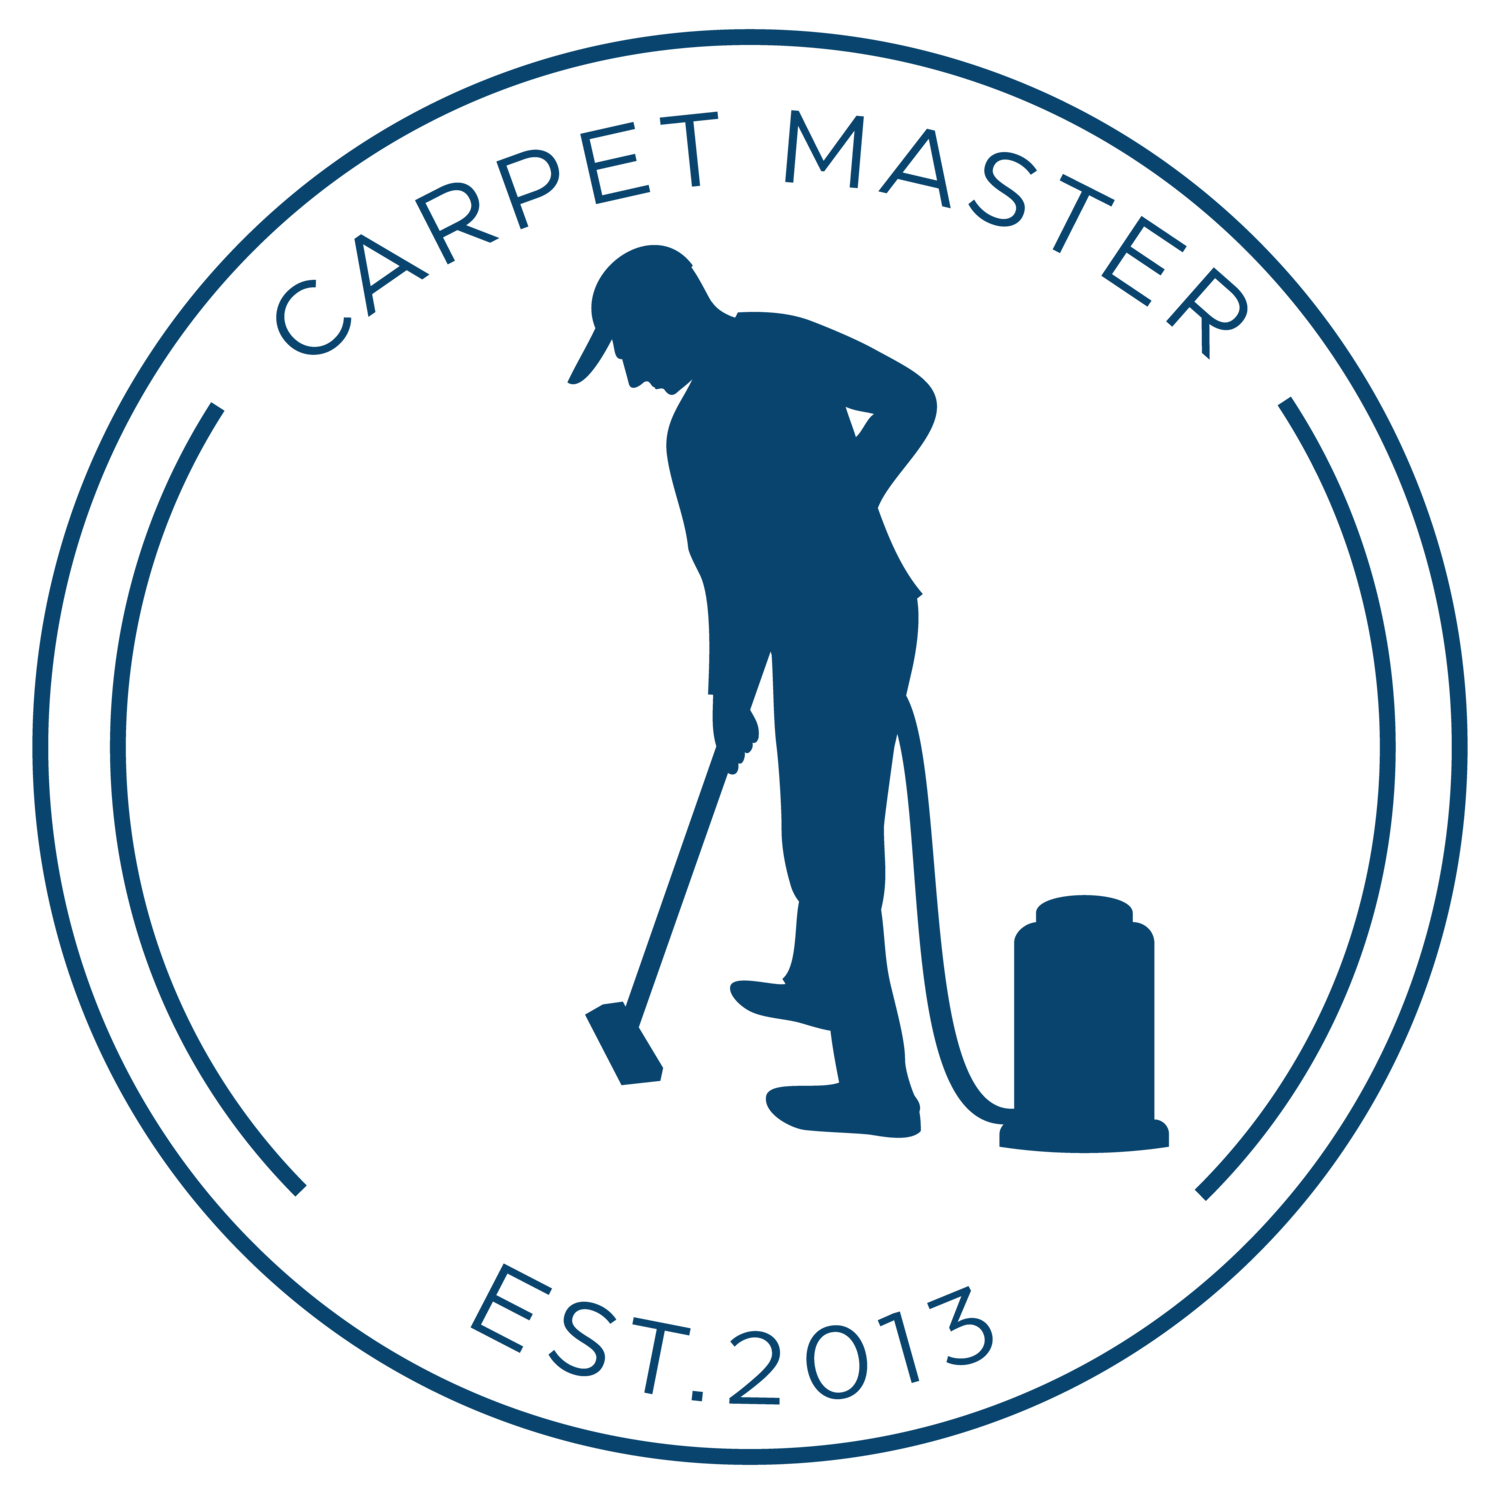 Carper Master Cleaning Service